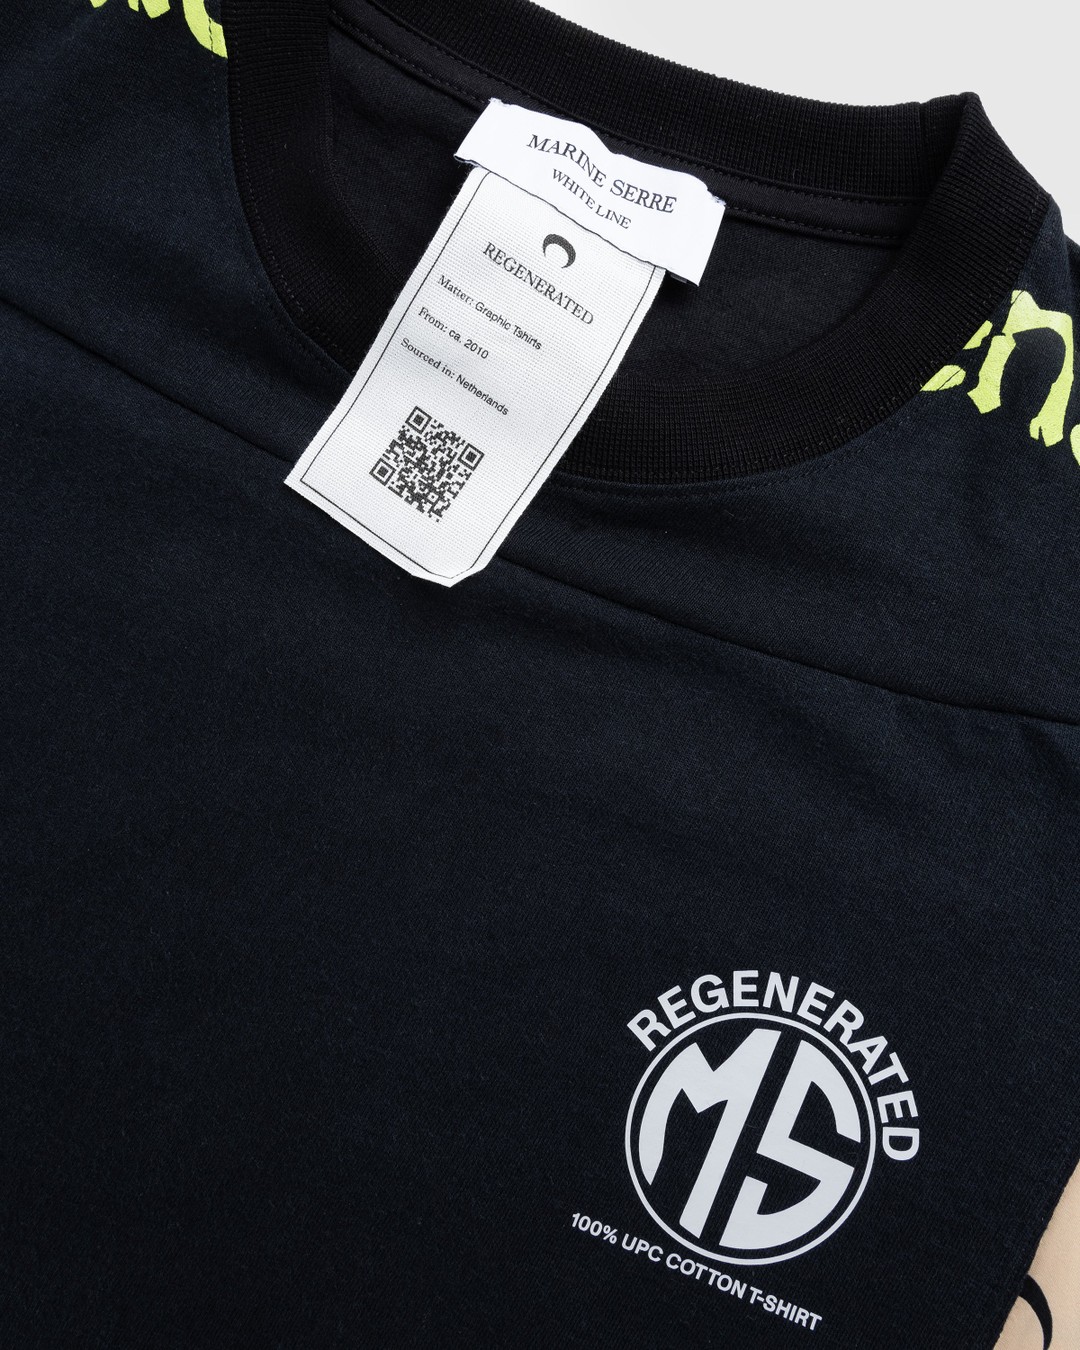 Marine Serre – Regenerated Graphic T-Shirt Black - T-shirts - Black - Image 5